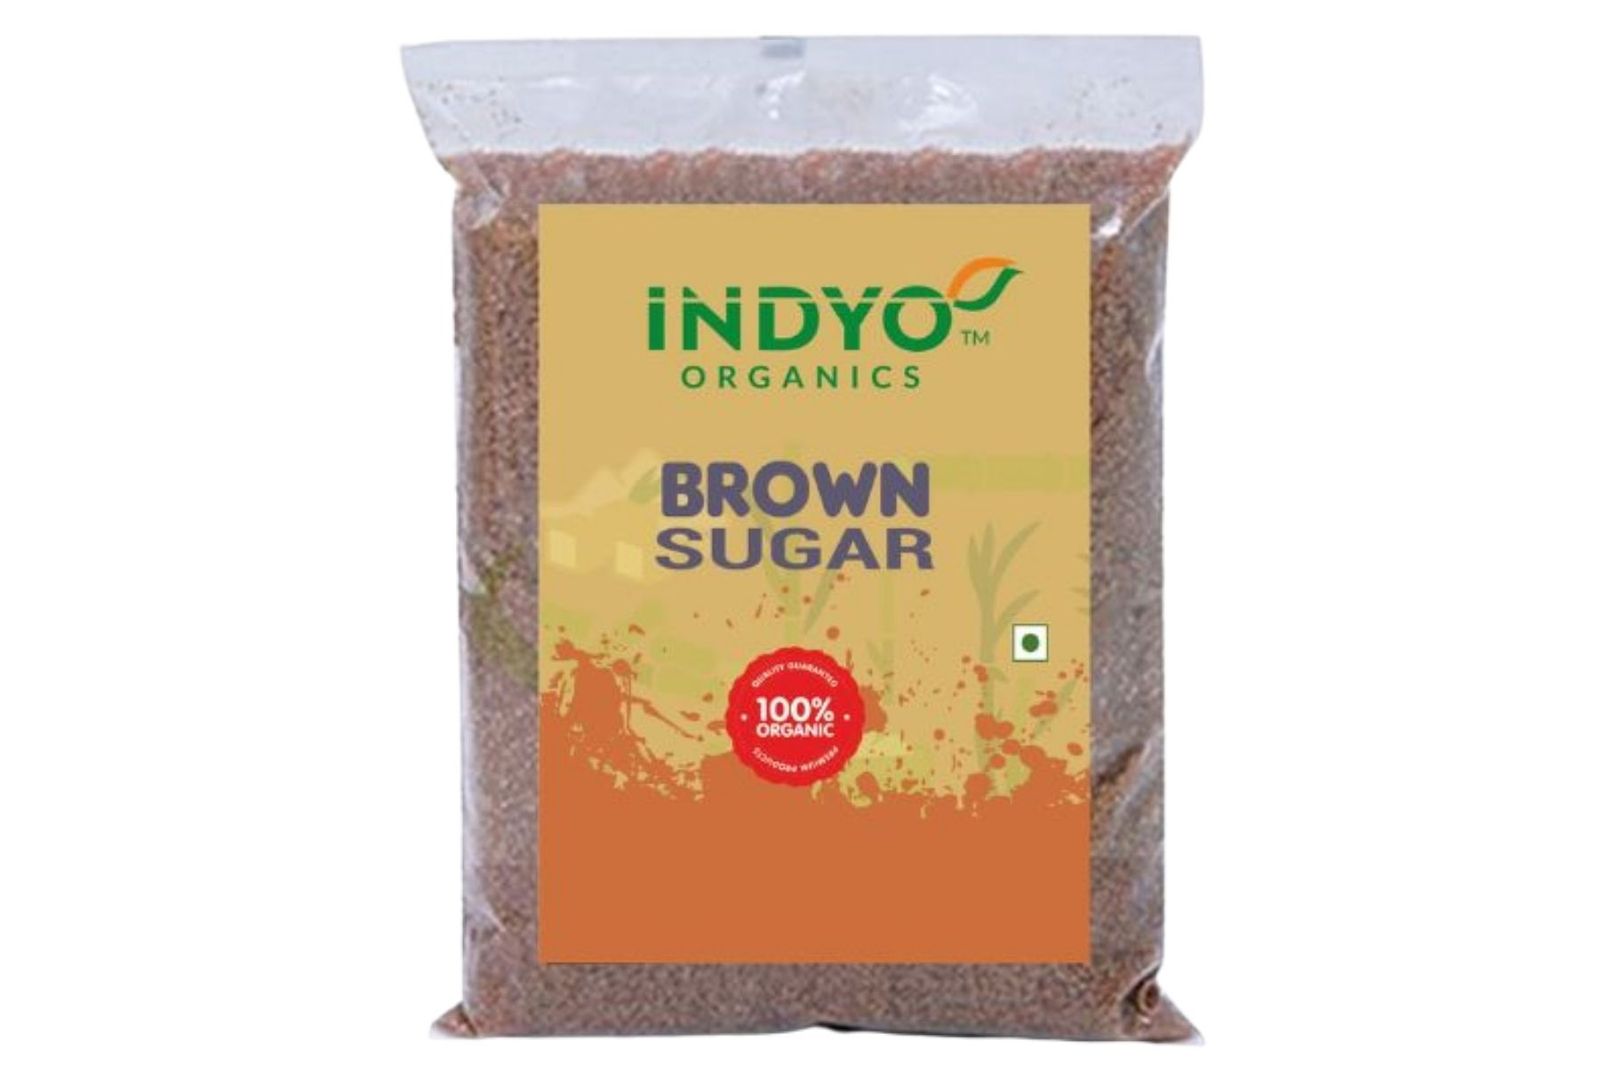 Indyo Organics Brown Sugar